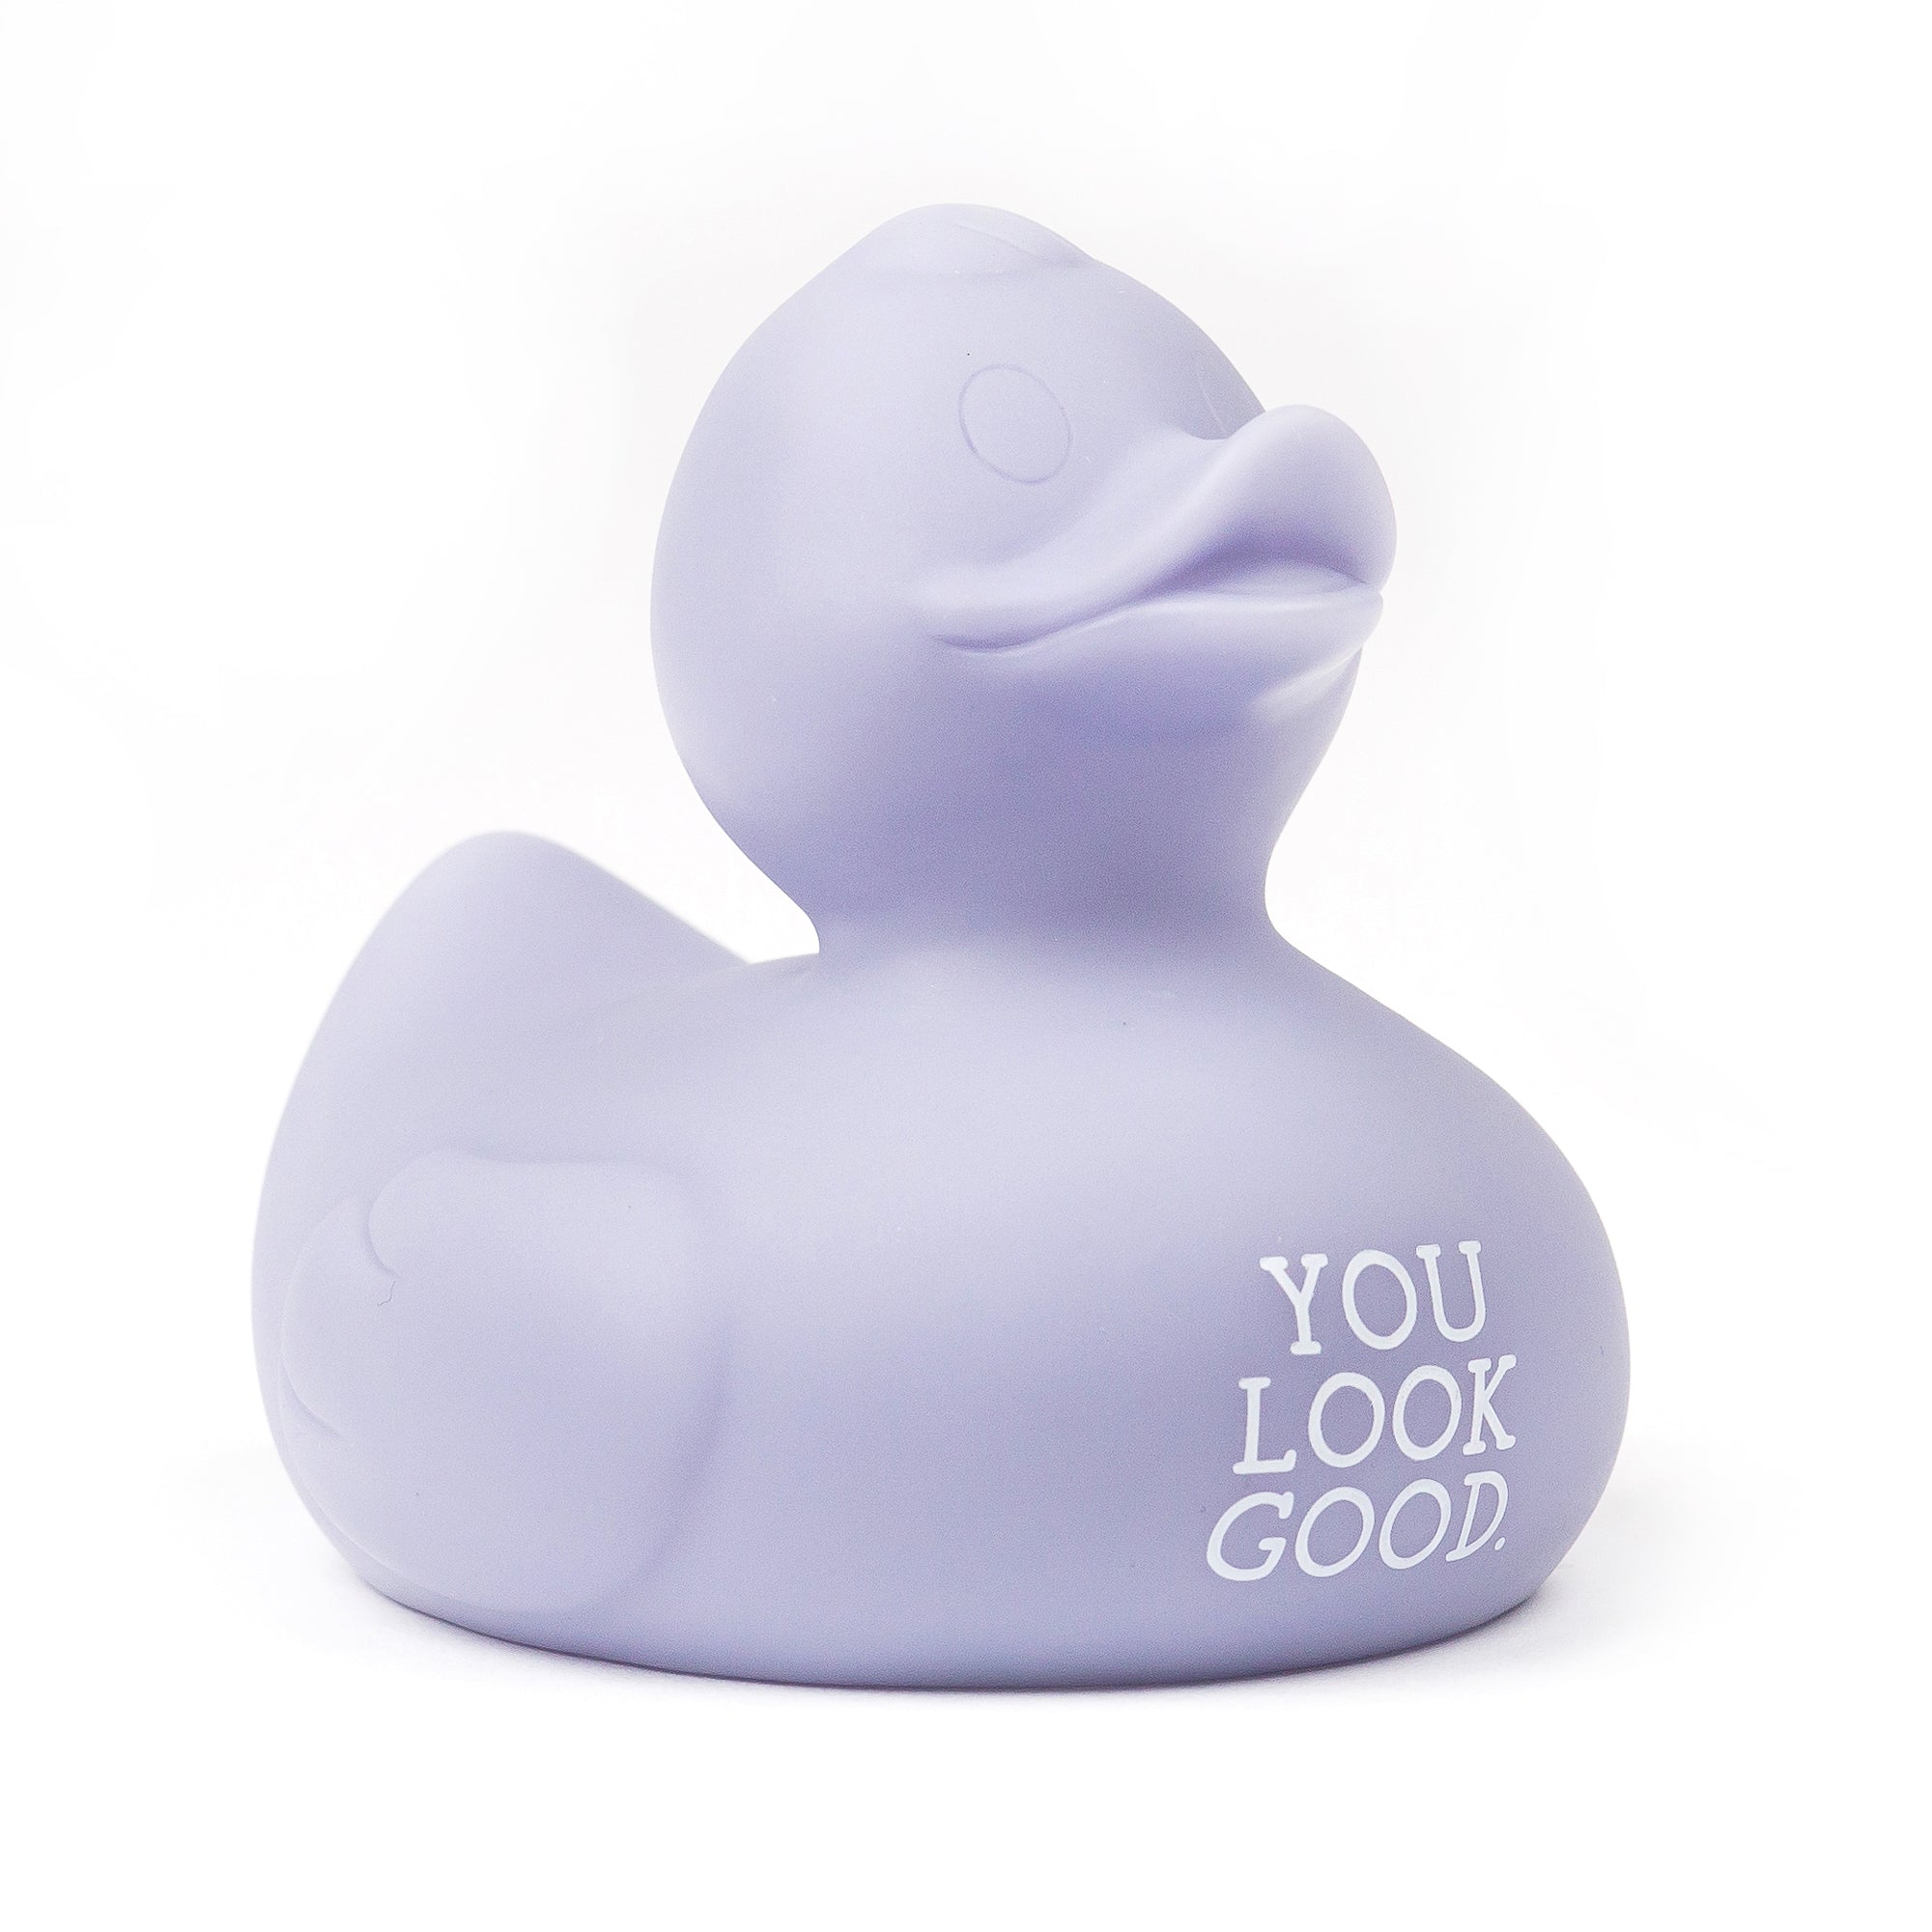 Look Good Wonder Duck